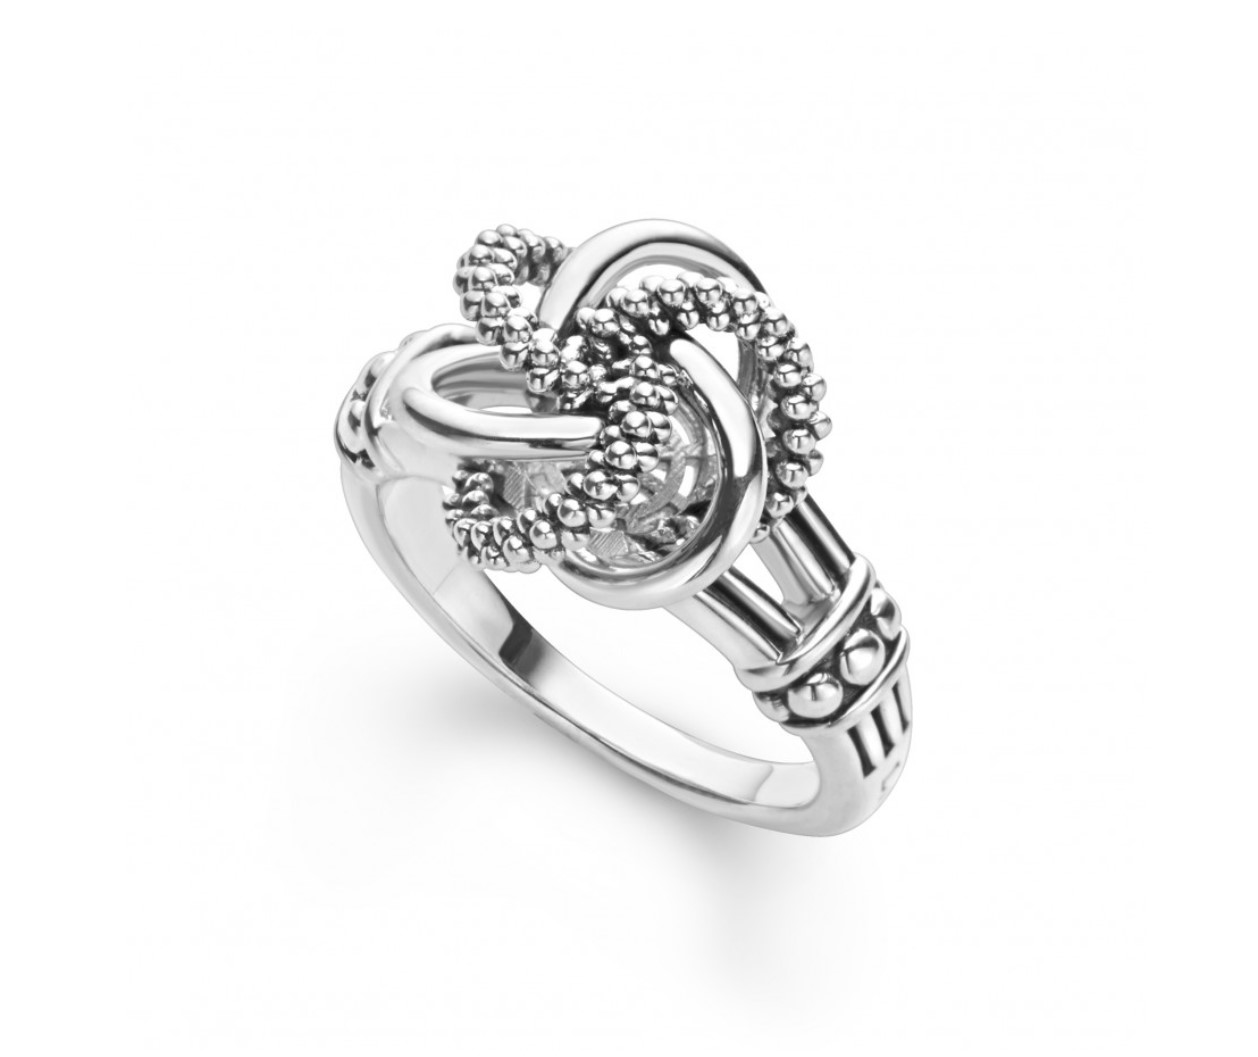 LAGOS "Love Knot" Ring